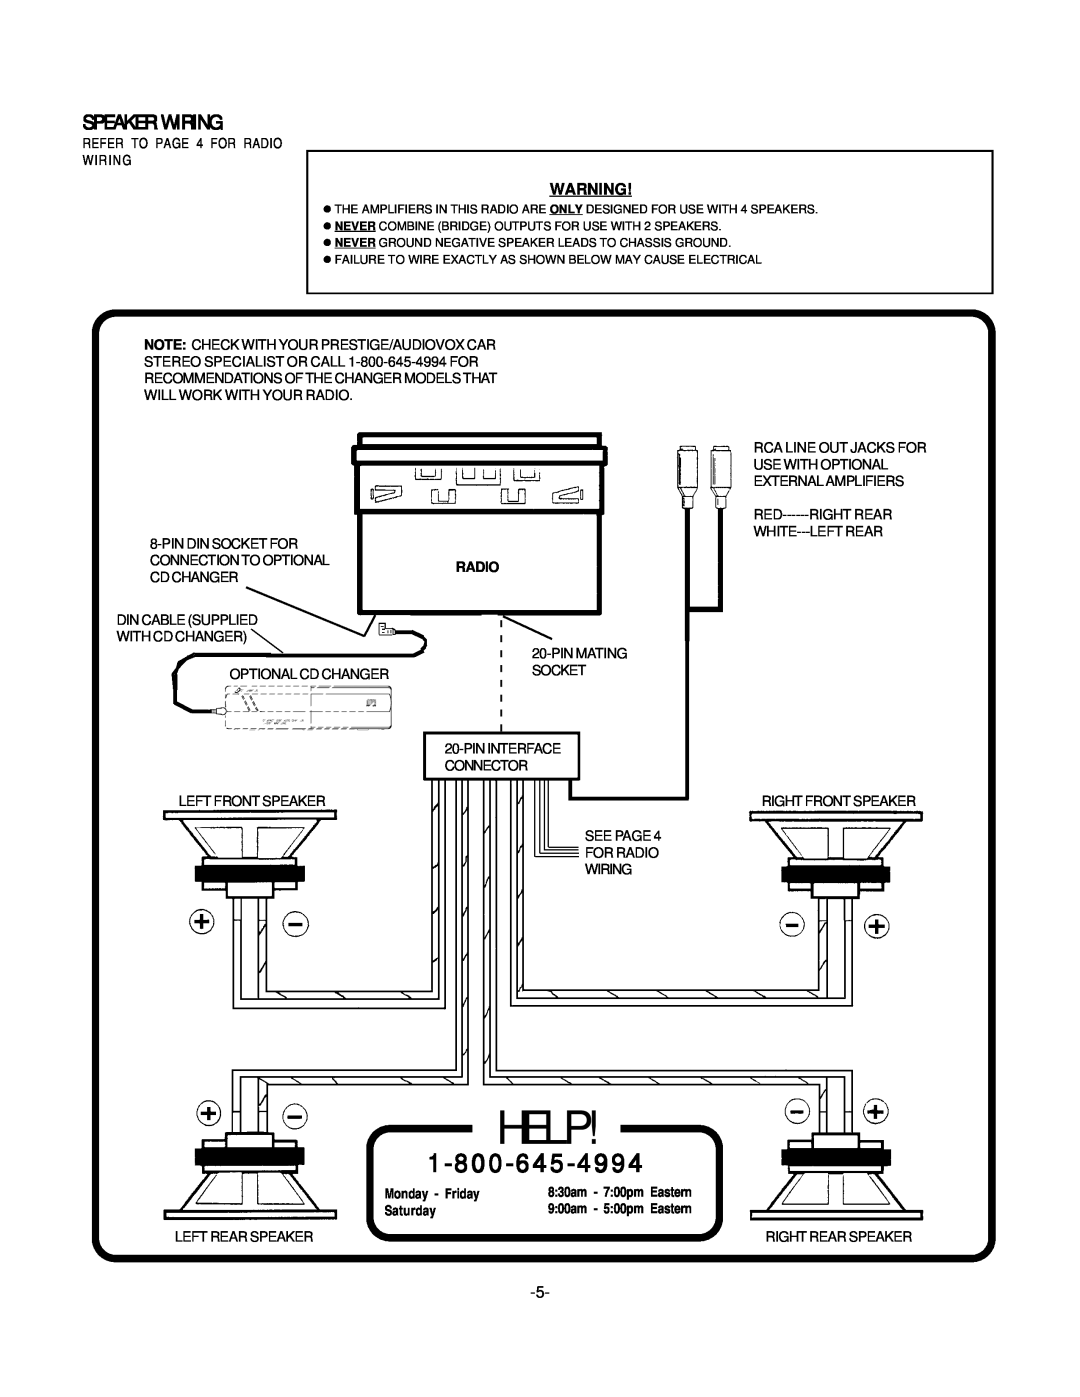 Nokia P-49 installation manual Speaker Wiring, Help, Saturday 